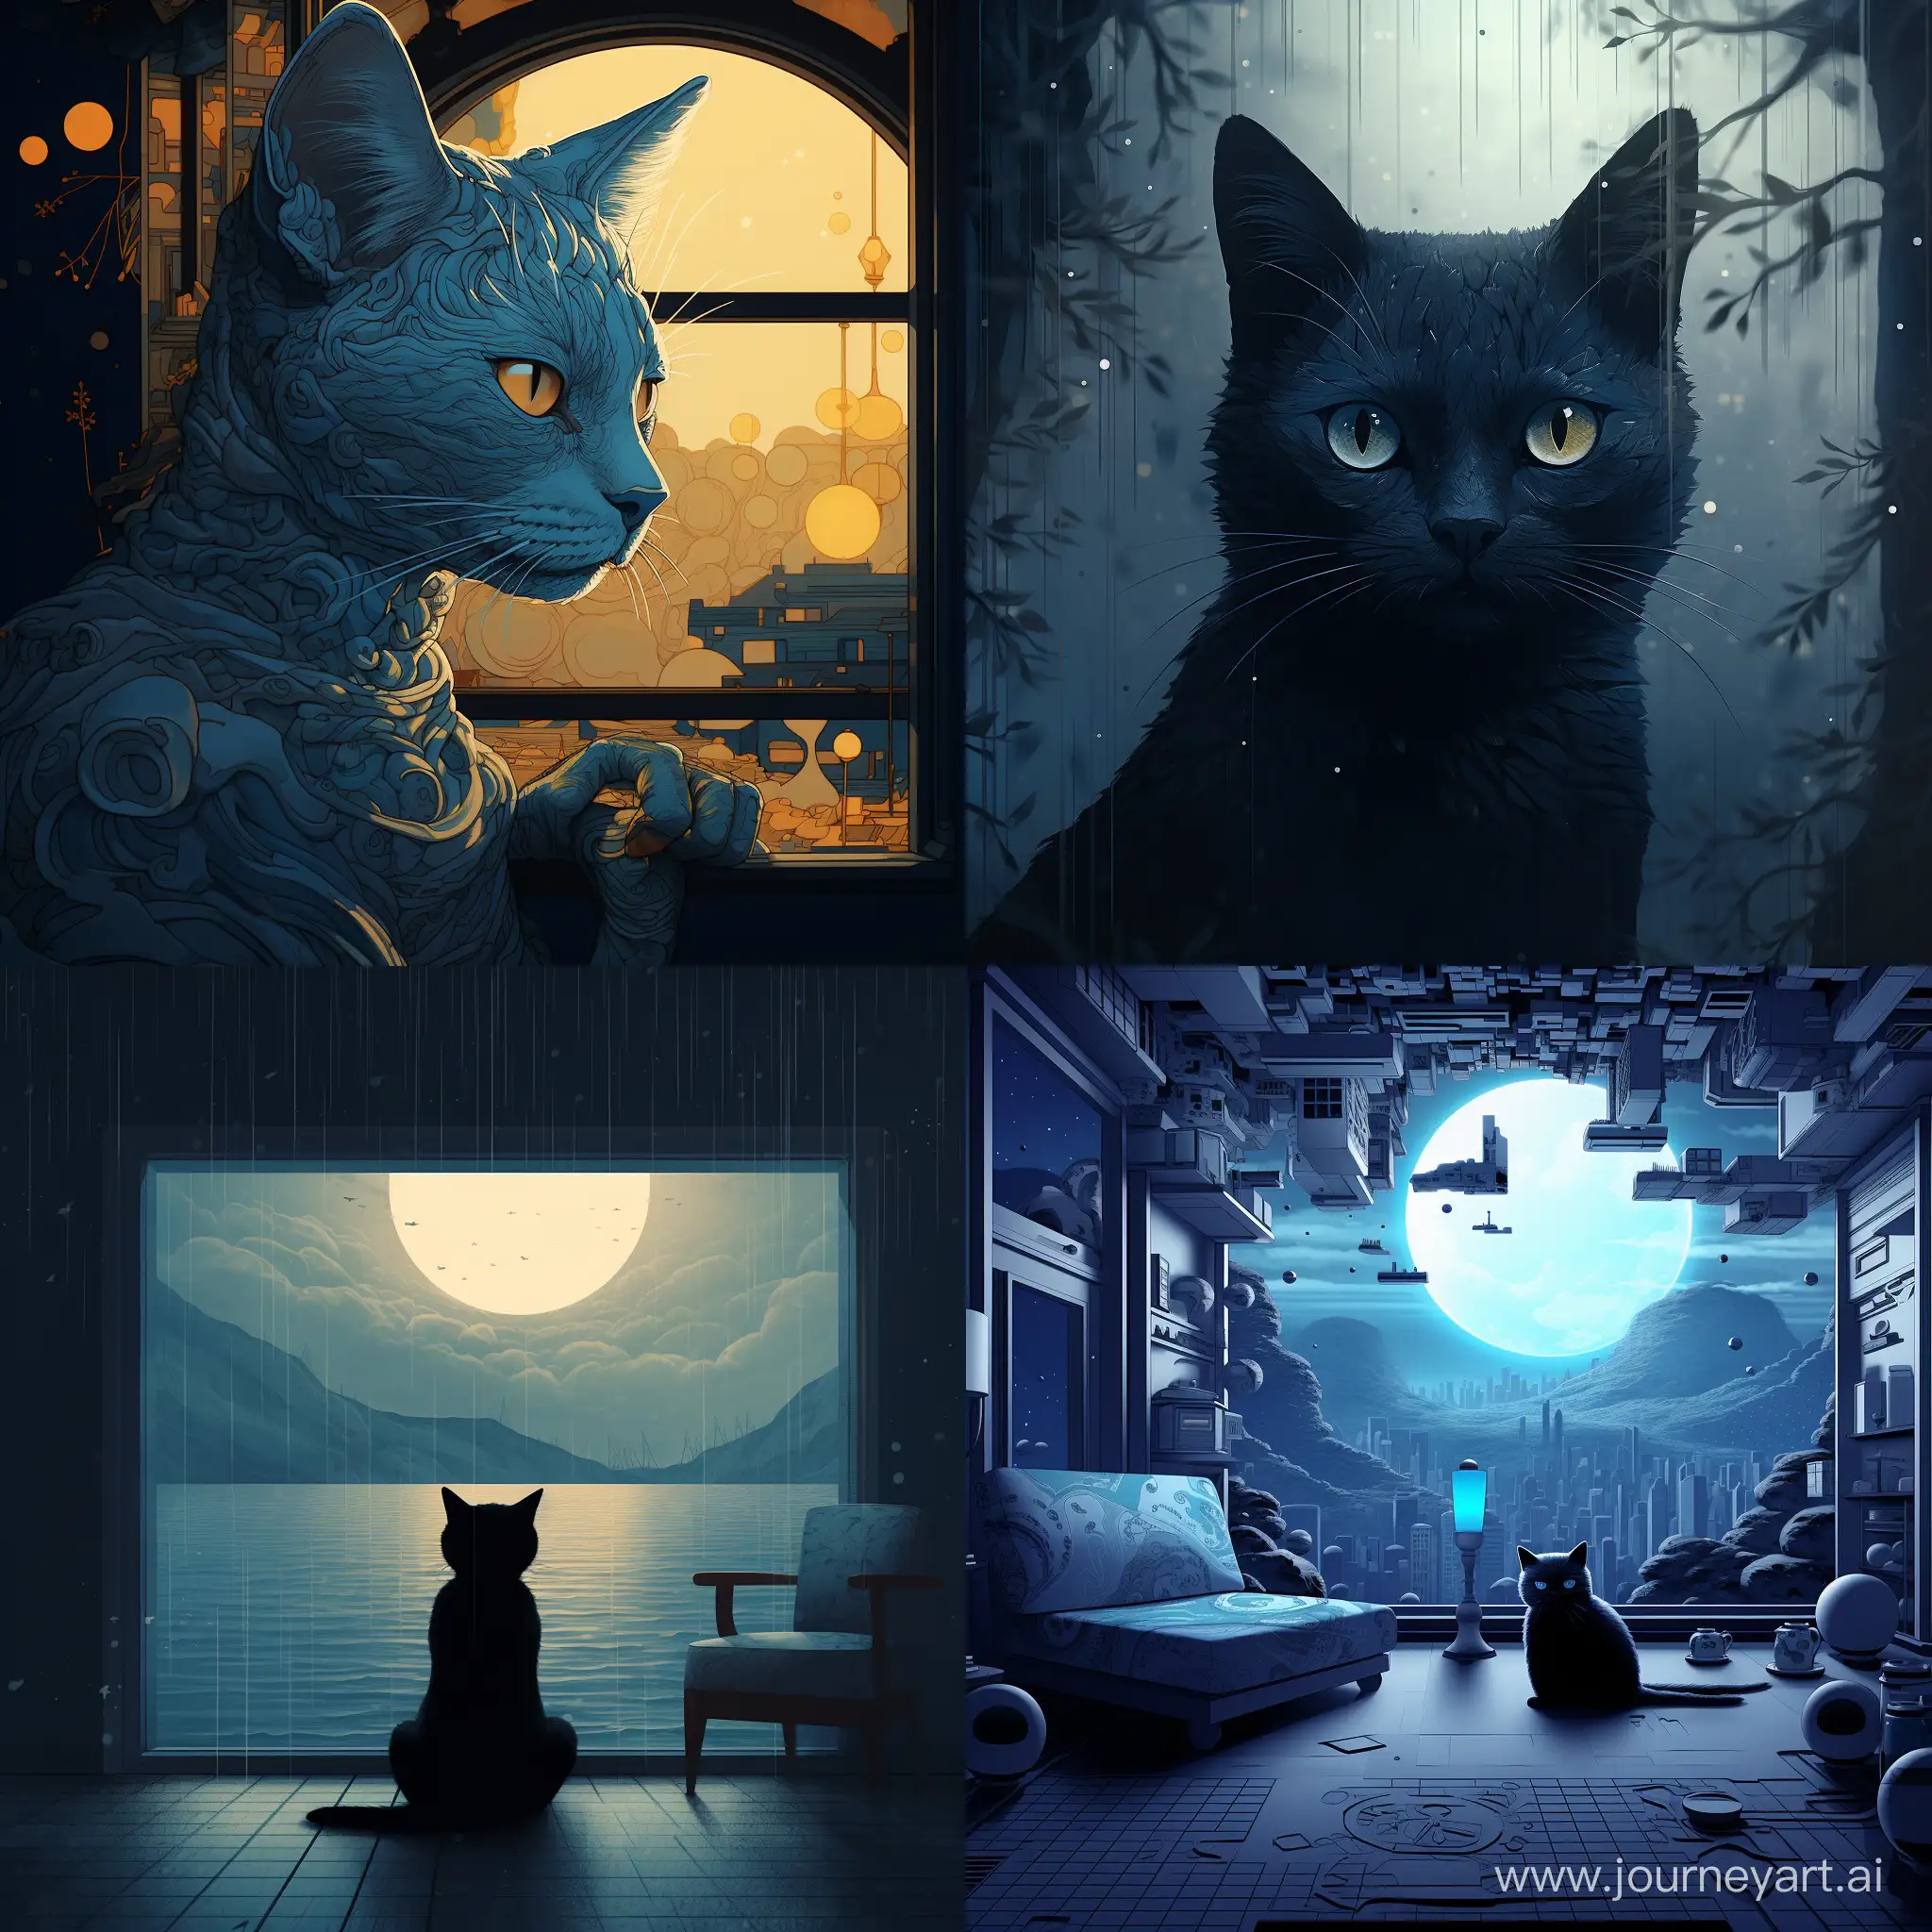 2D::2 минимализм, голубая кошка с черными узорами лениво на фоне окна, мягкий свет проникает через окна отбрасывая блики на кошку, 2D минимализм